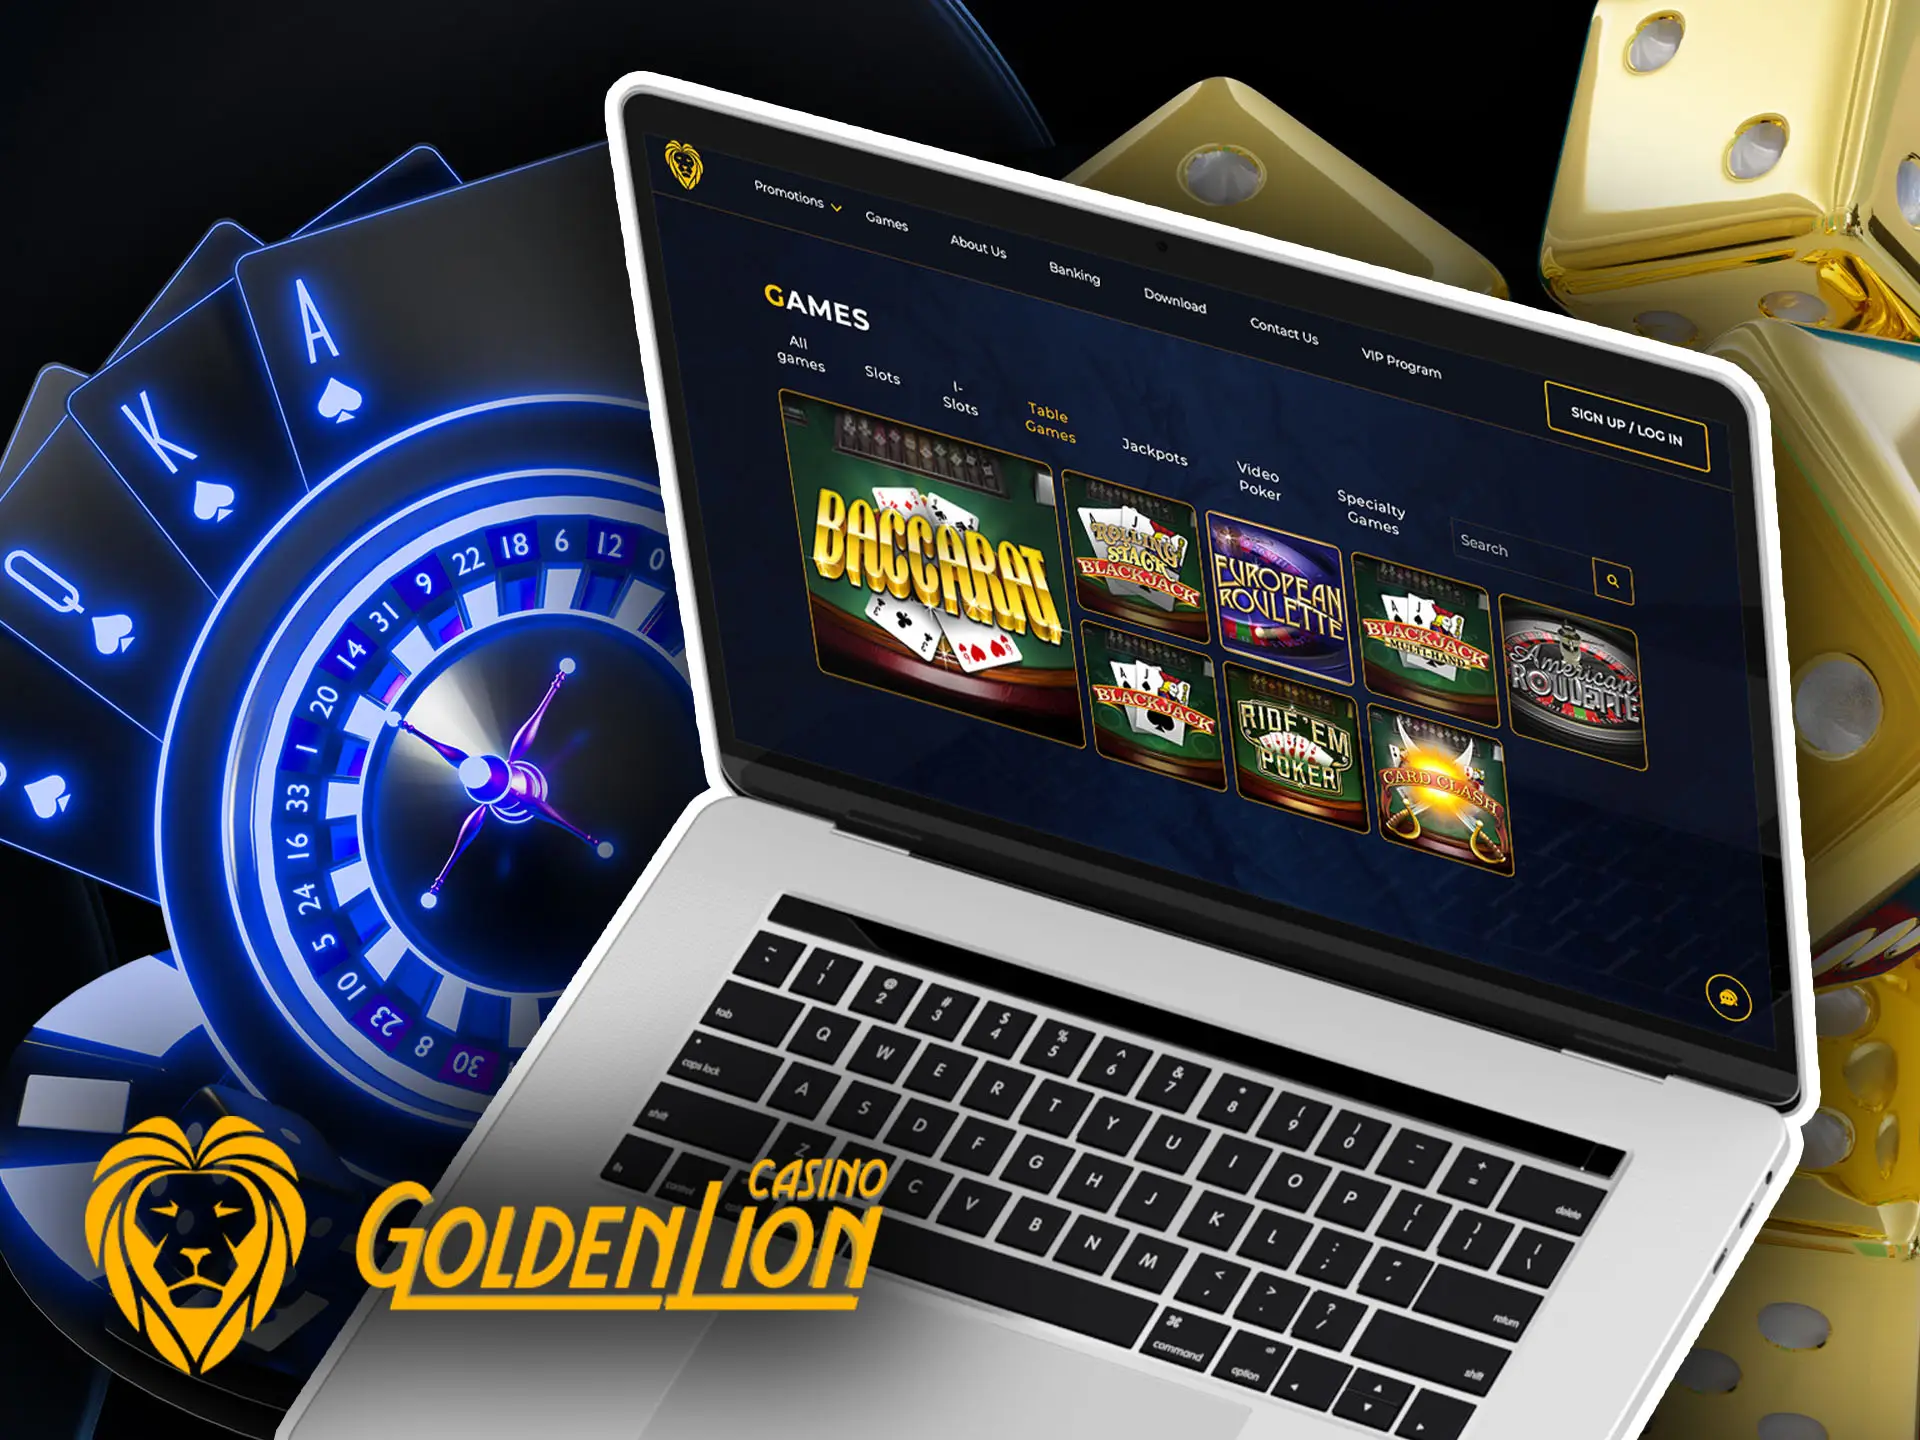 Table games at Golden Lion Casino for Australia.